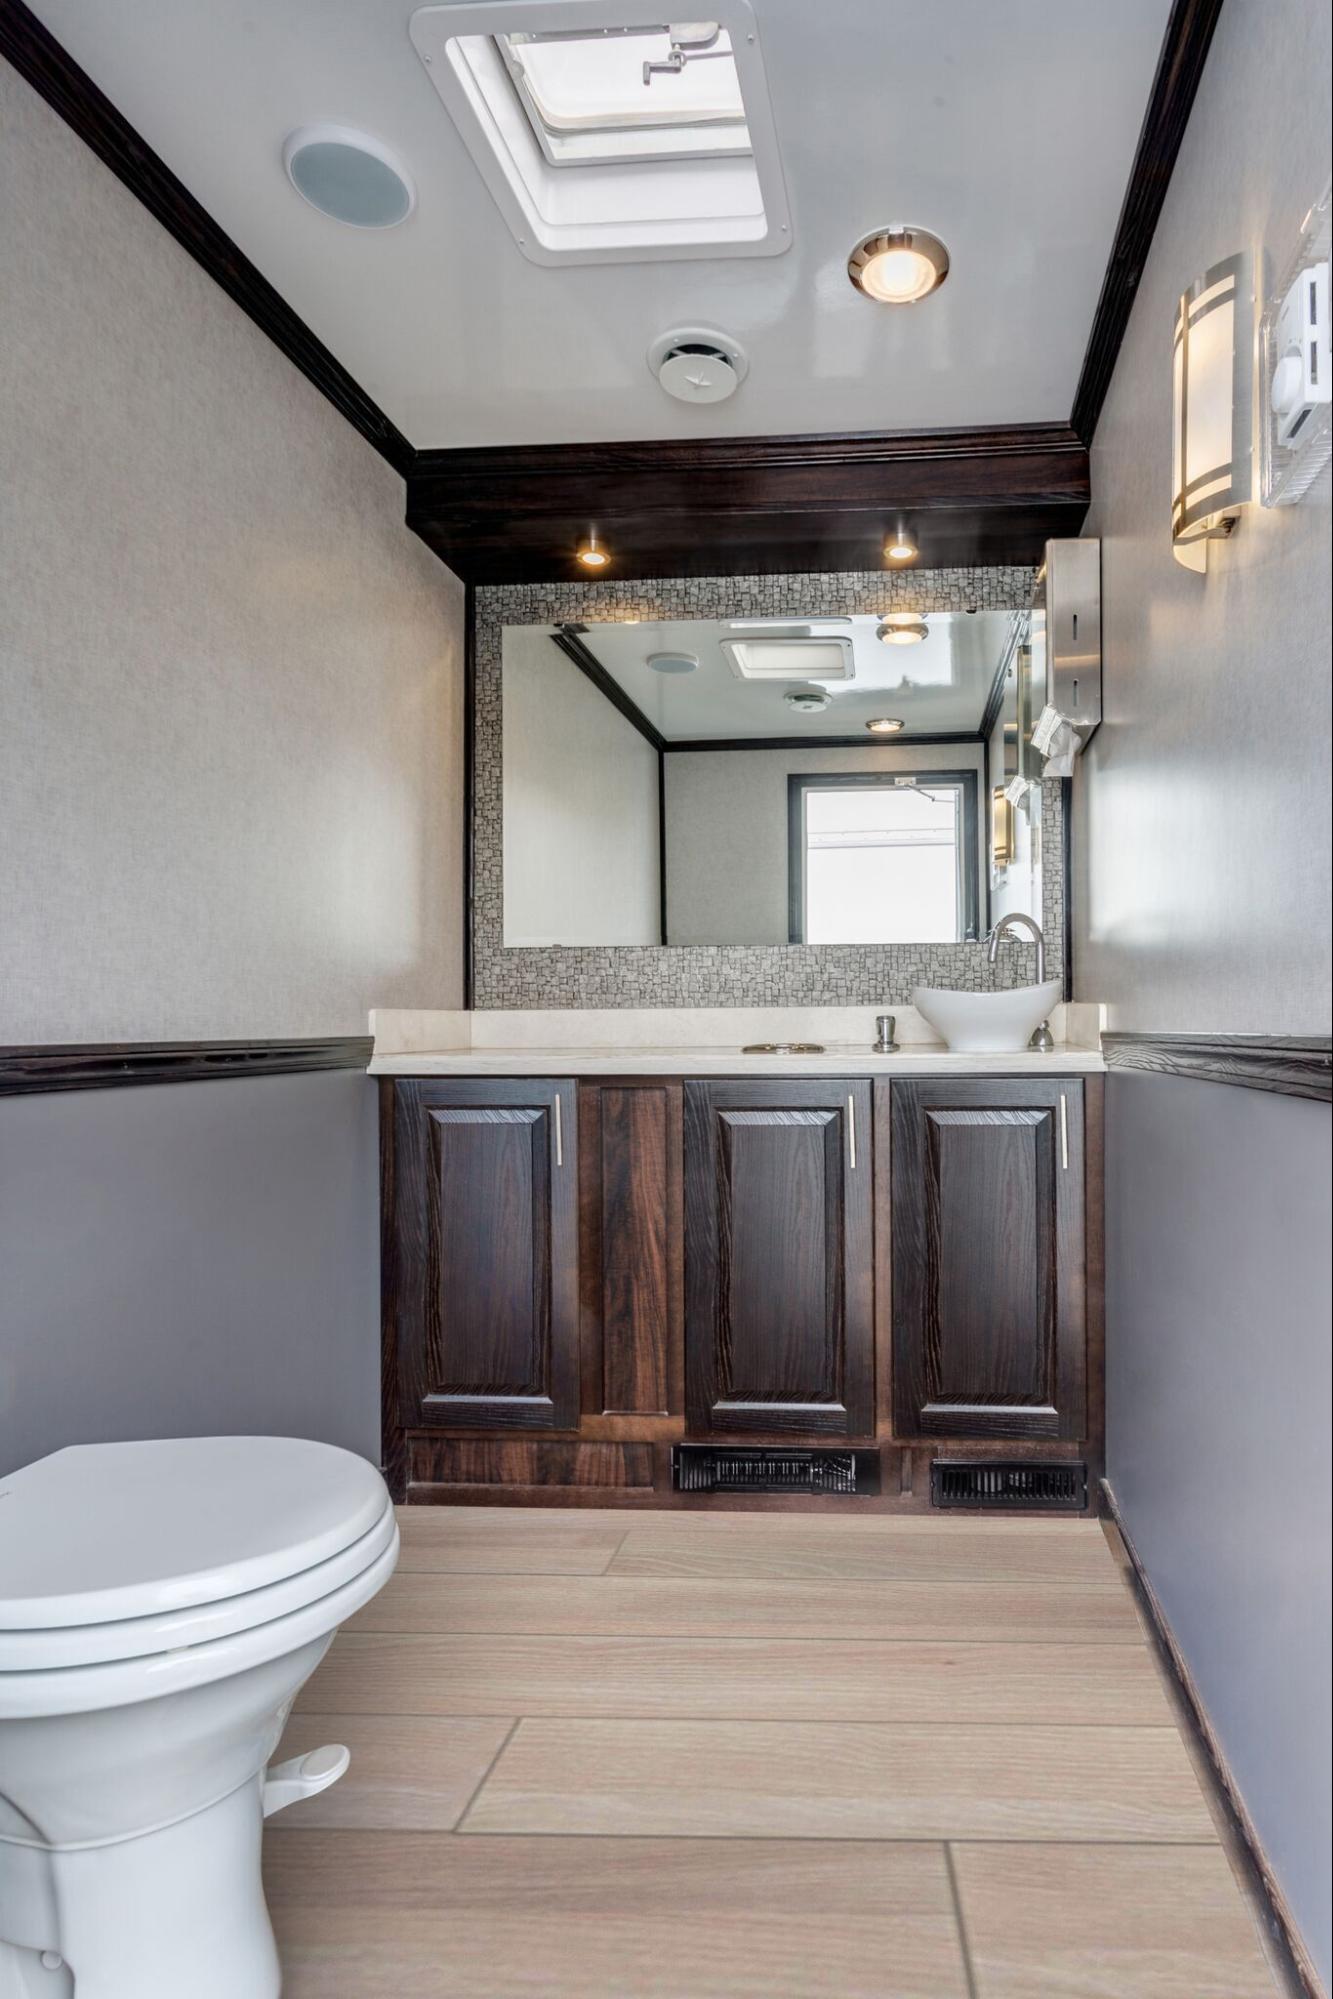 interior design of restroom trailer